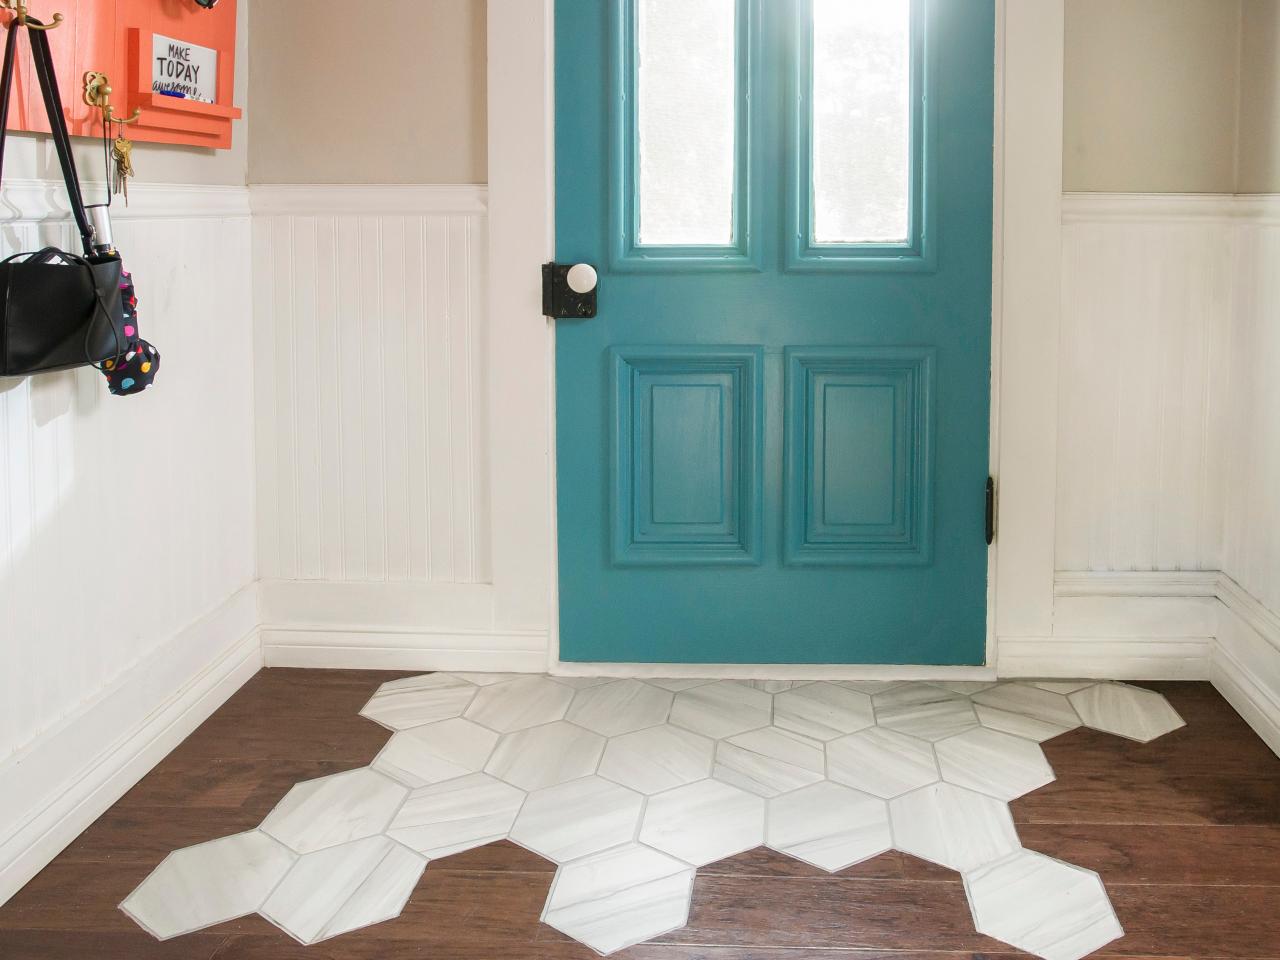 A Tile Rug Within Hardwood Floor, Laying Tiles Over Wooden Floor